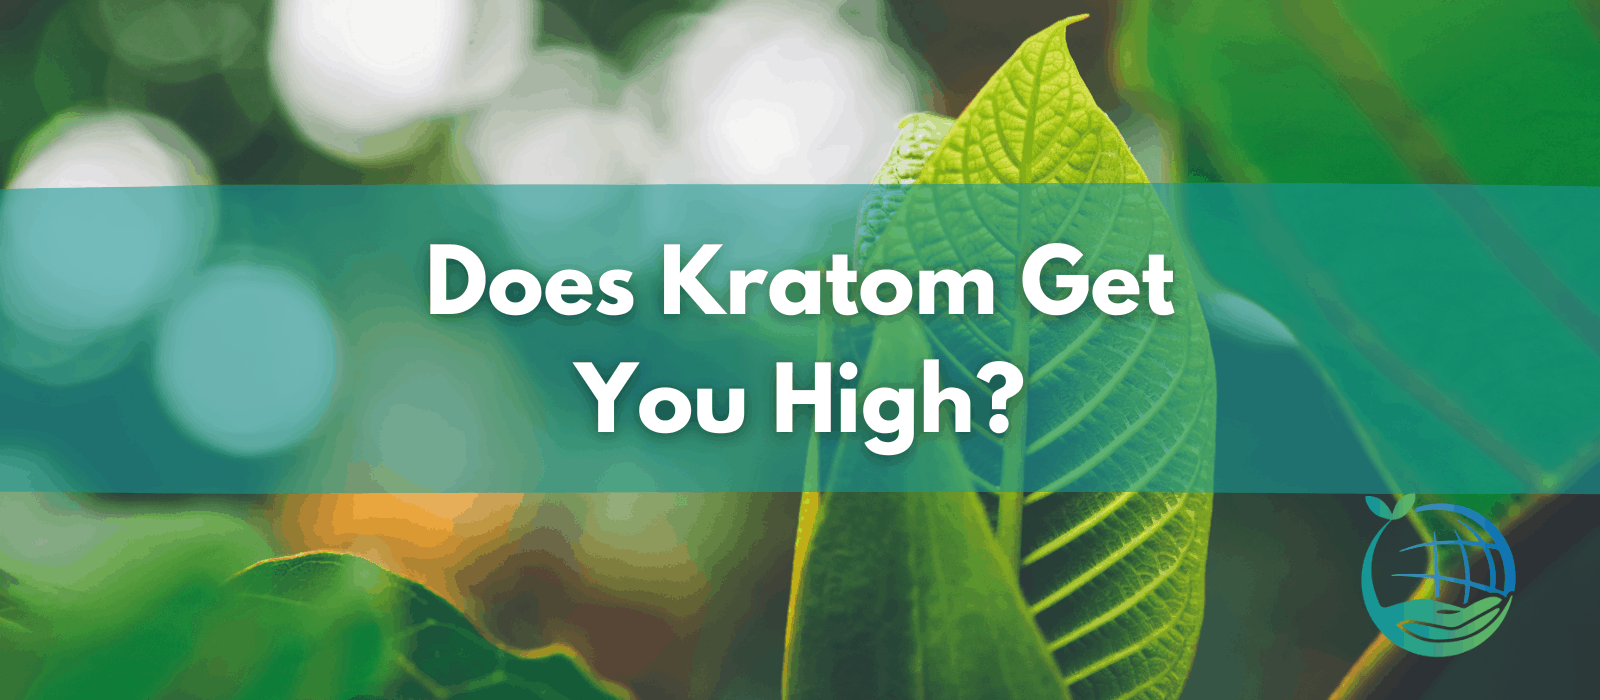 Does Kratom Get You High